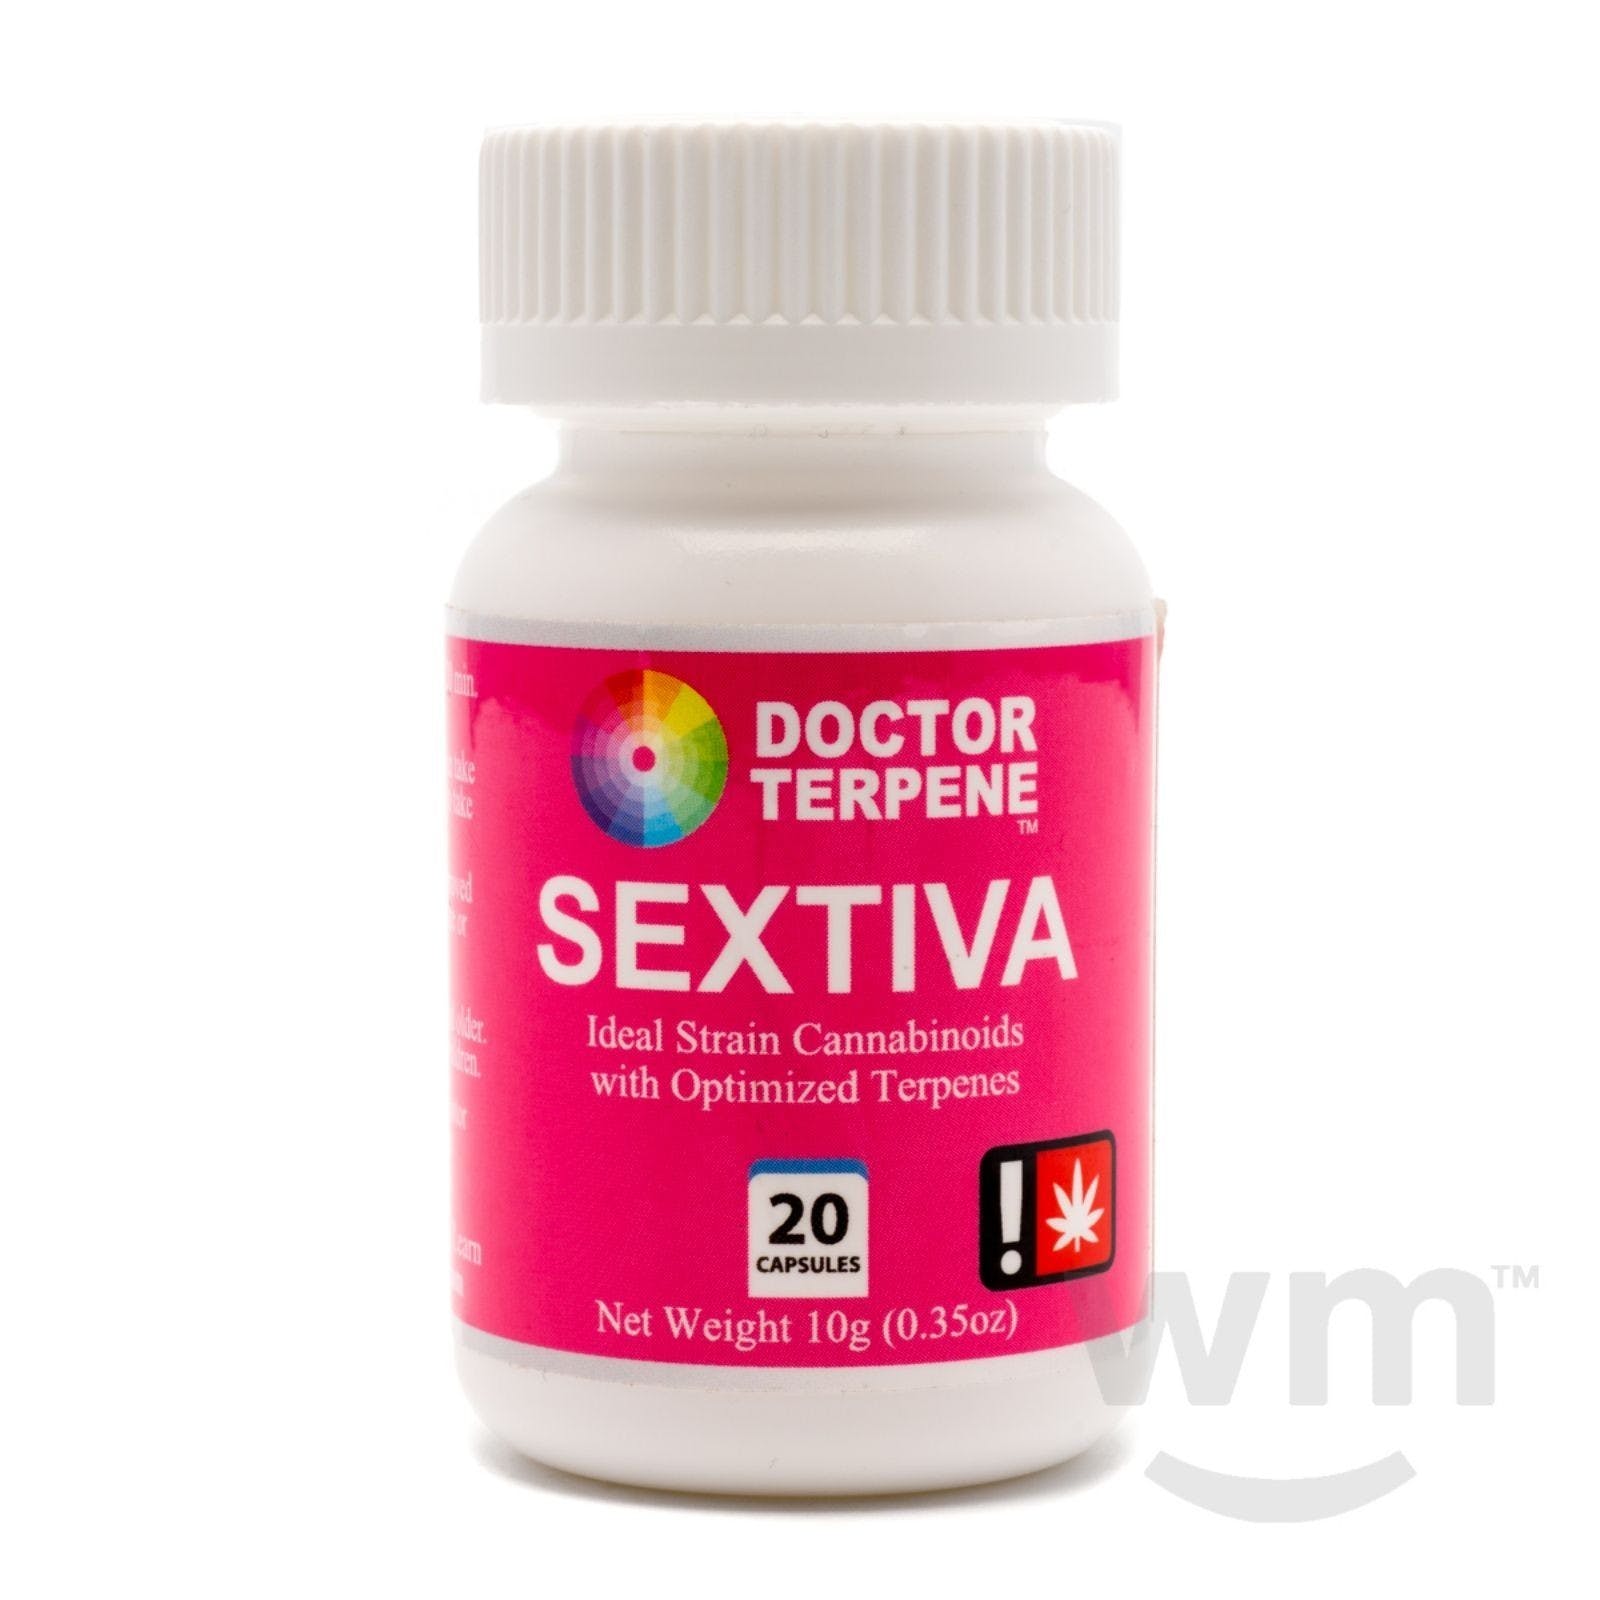 edible-doctor-terpene-sextiva-capsules